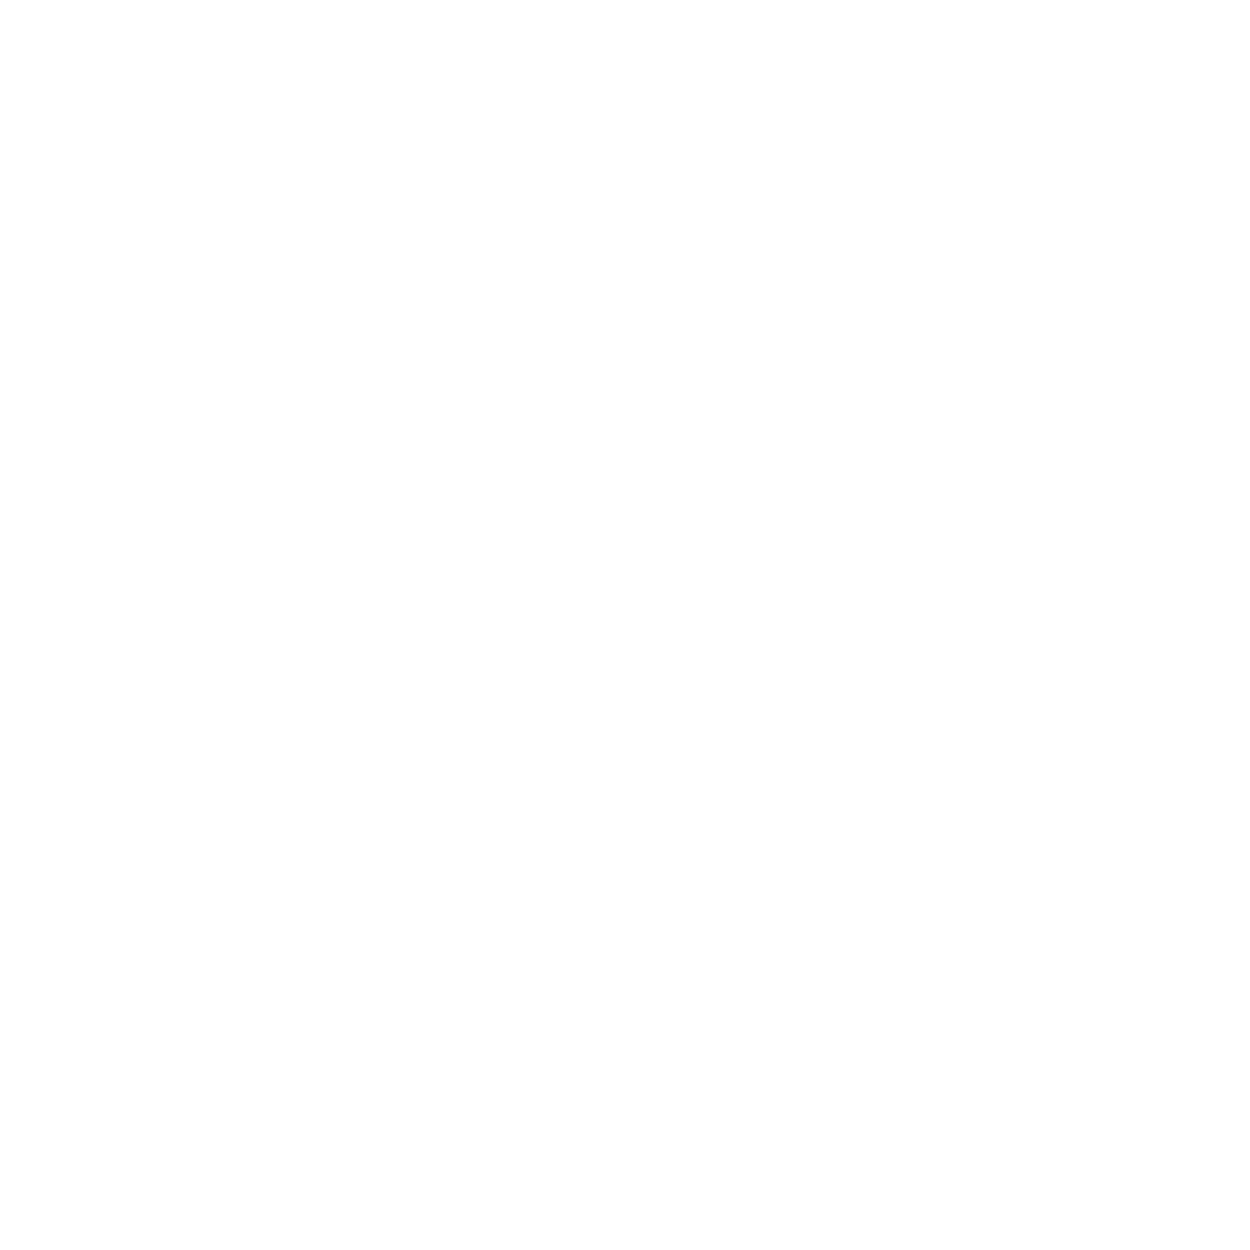 Priority Four